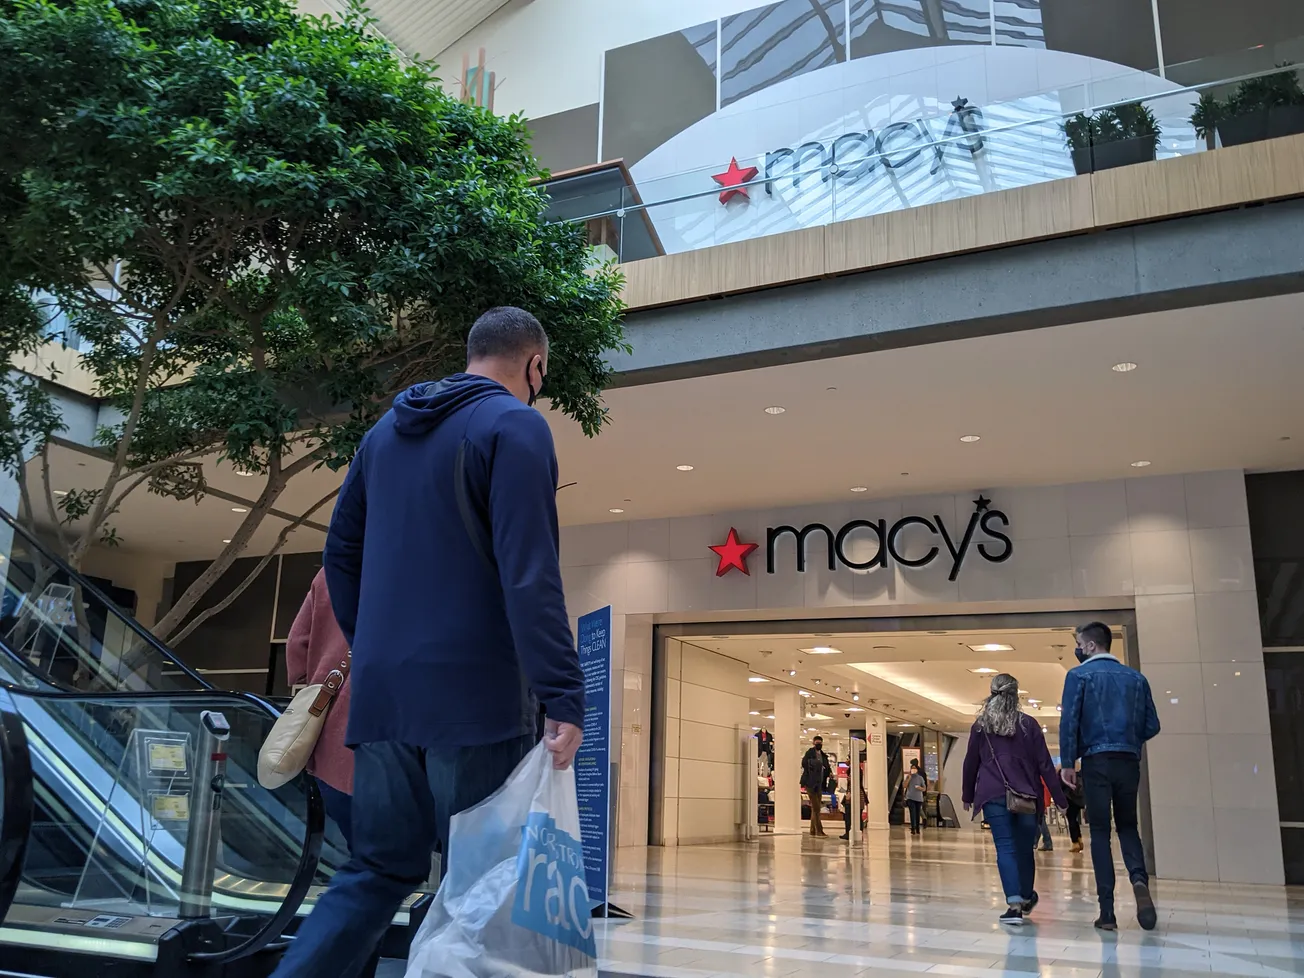 Macys store in mall